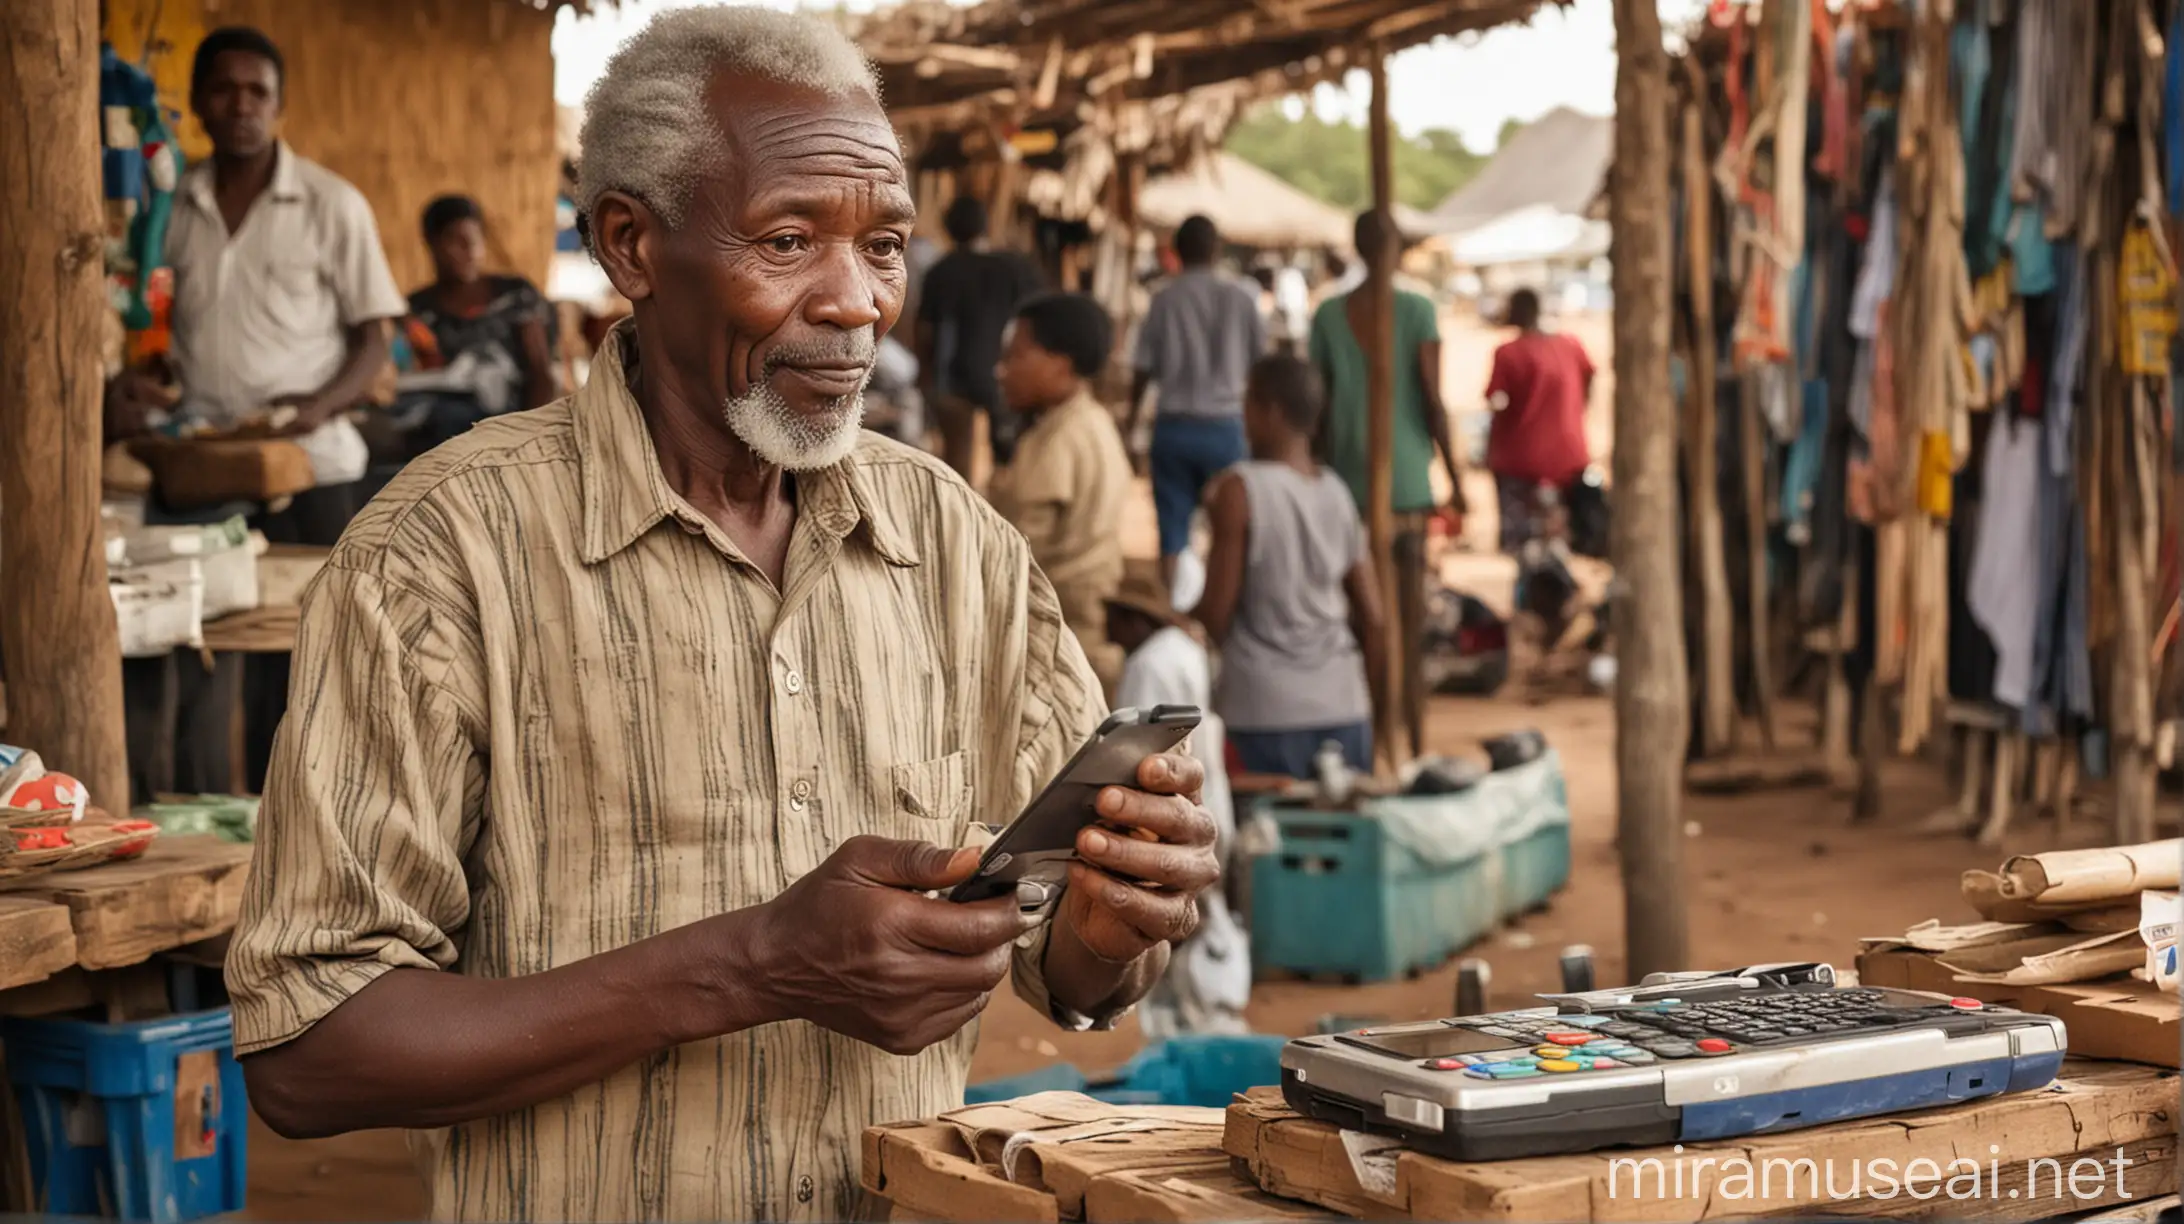 Elderly Mozambique Market Vendor with Mobile Point of Sale System